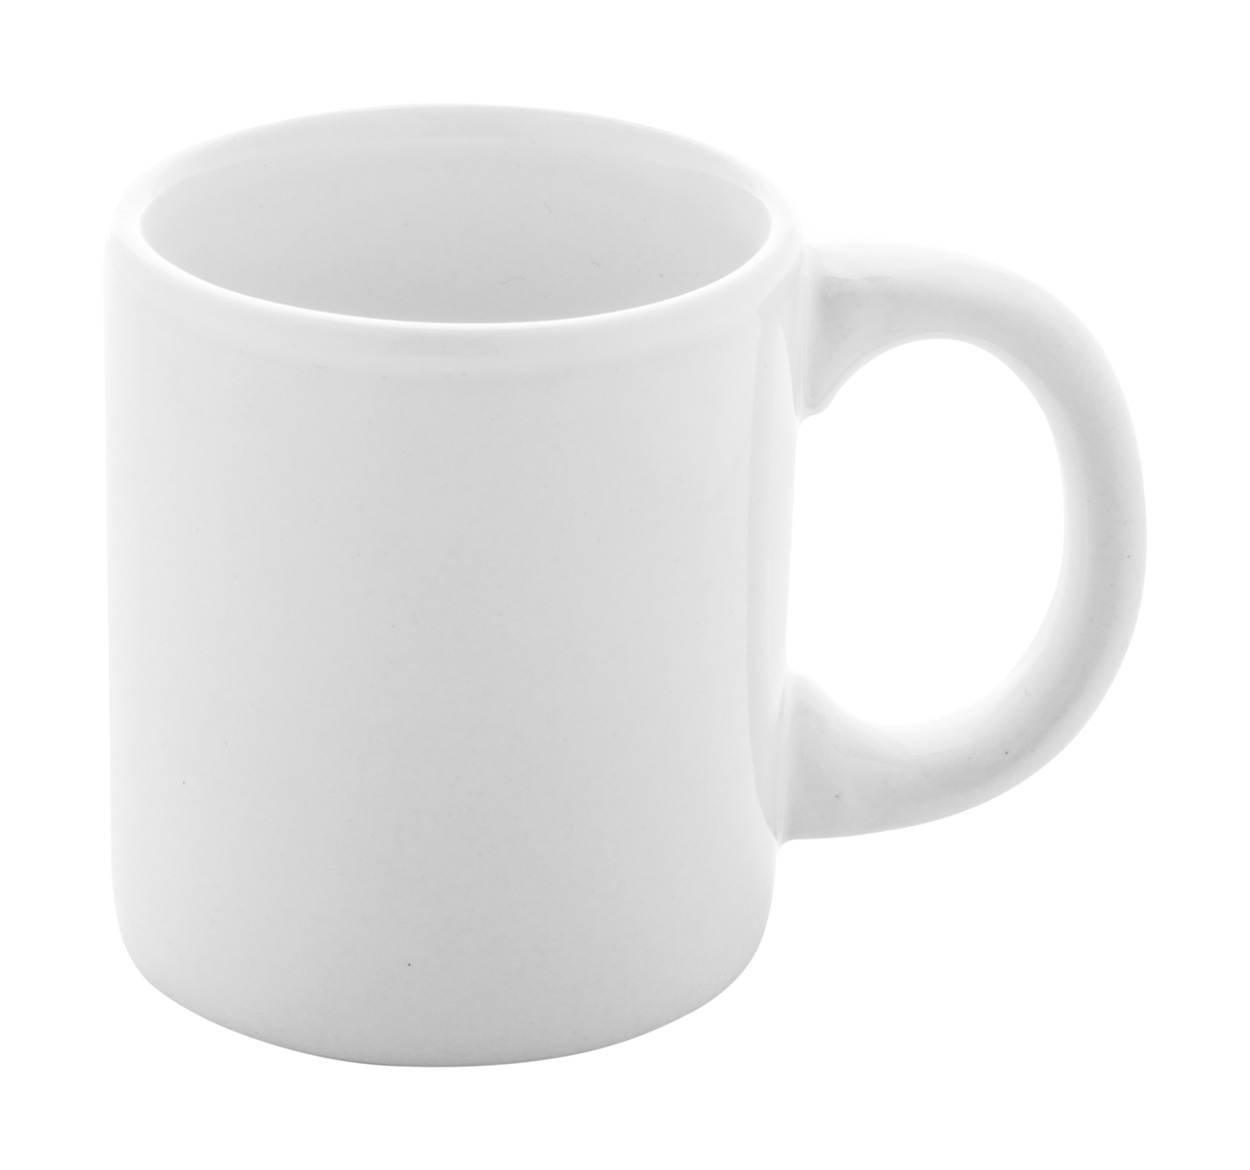 Promo  Lutin espresso mug